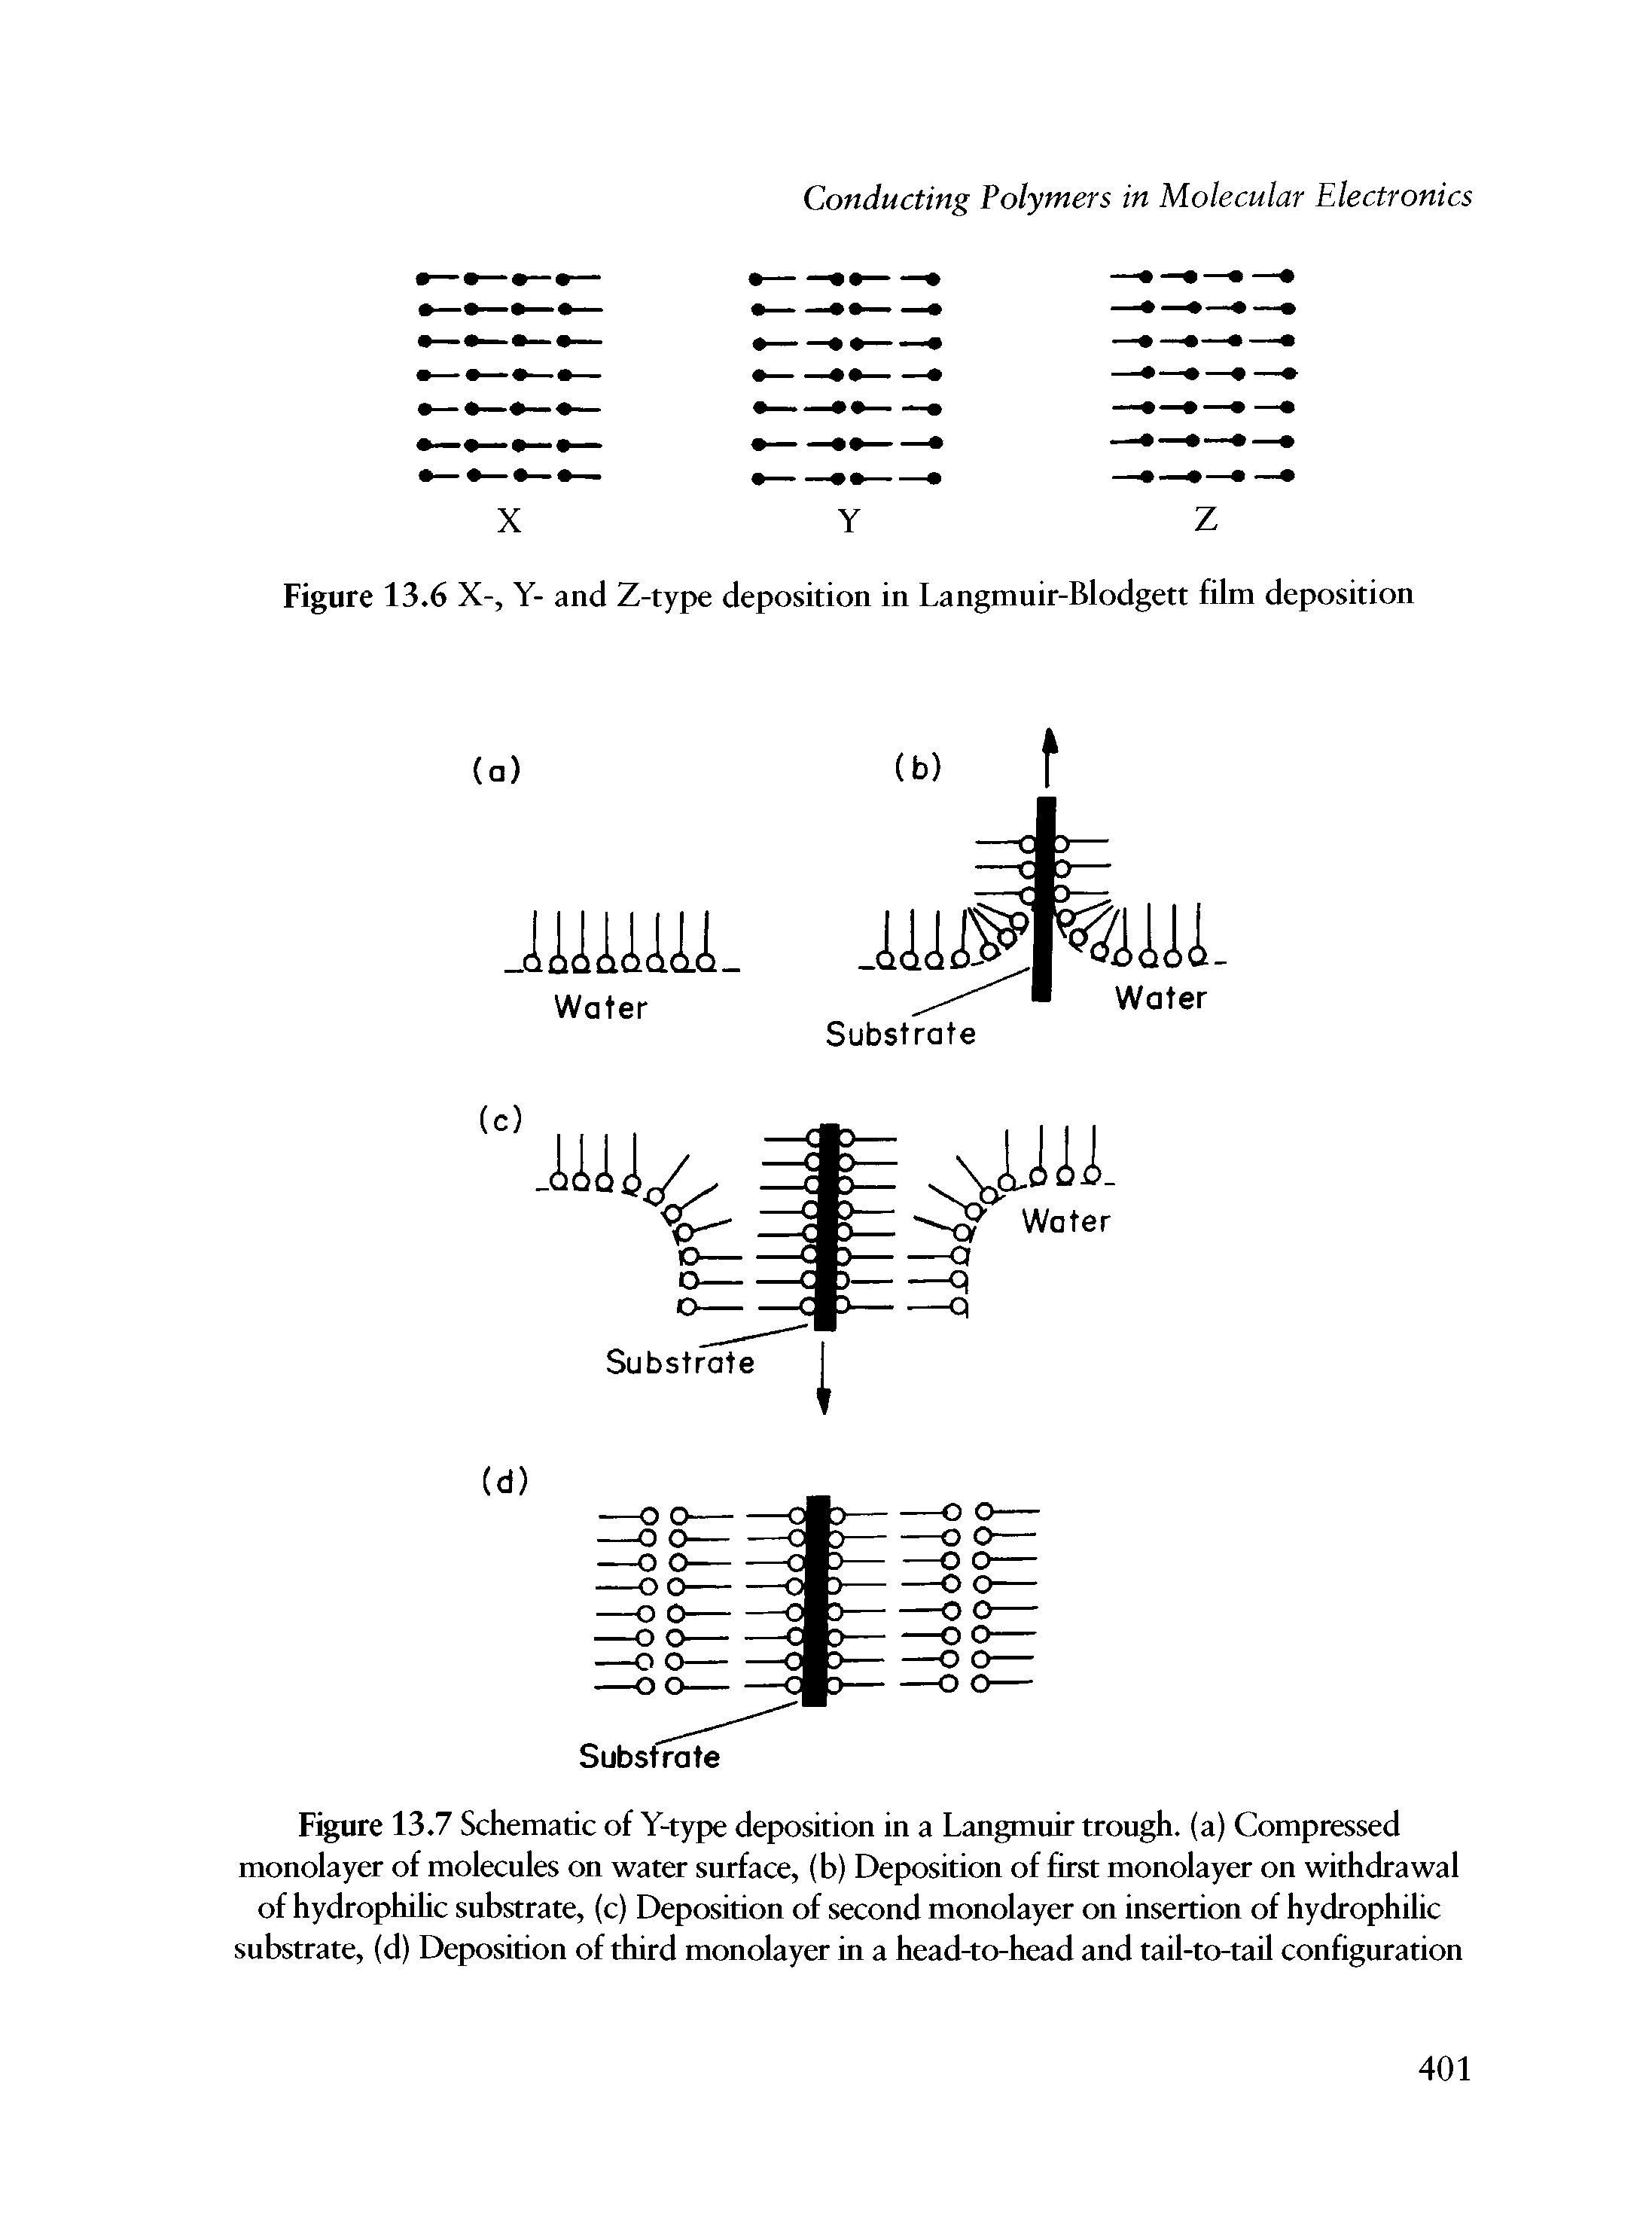 Figure 13.6 X-, Y- and Z-type deposition in Langmuir-Blodgett film deposition...